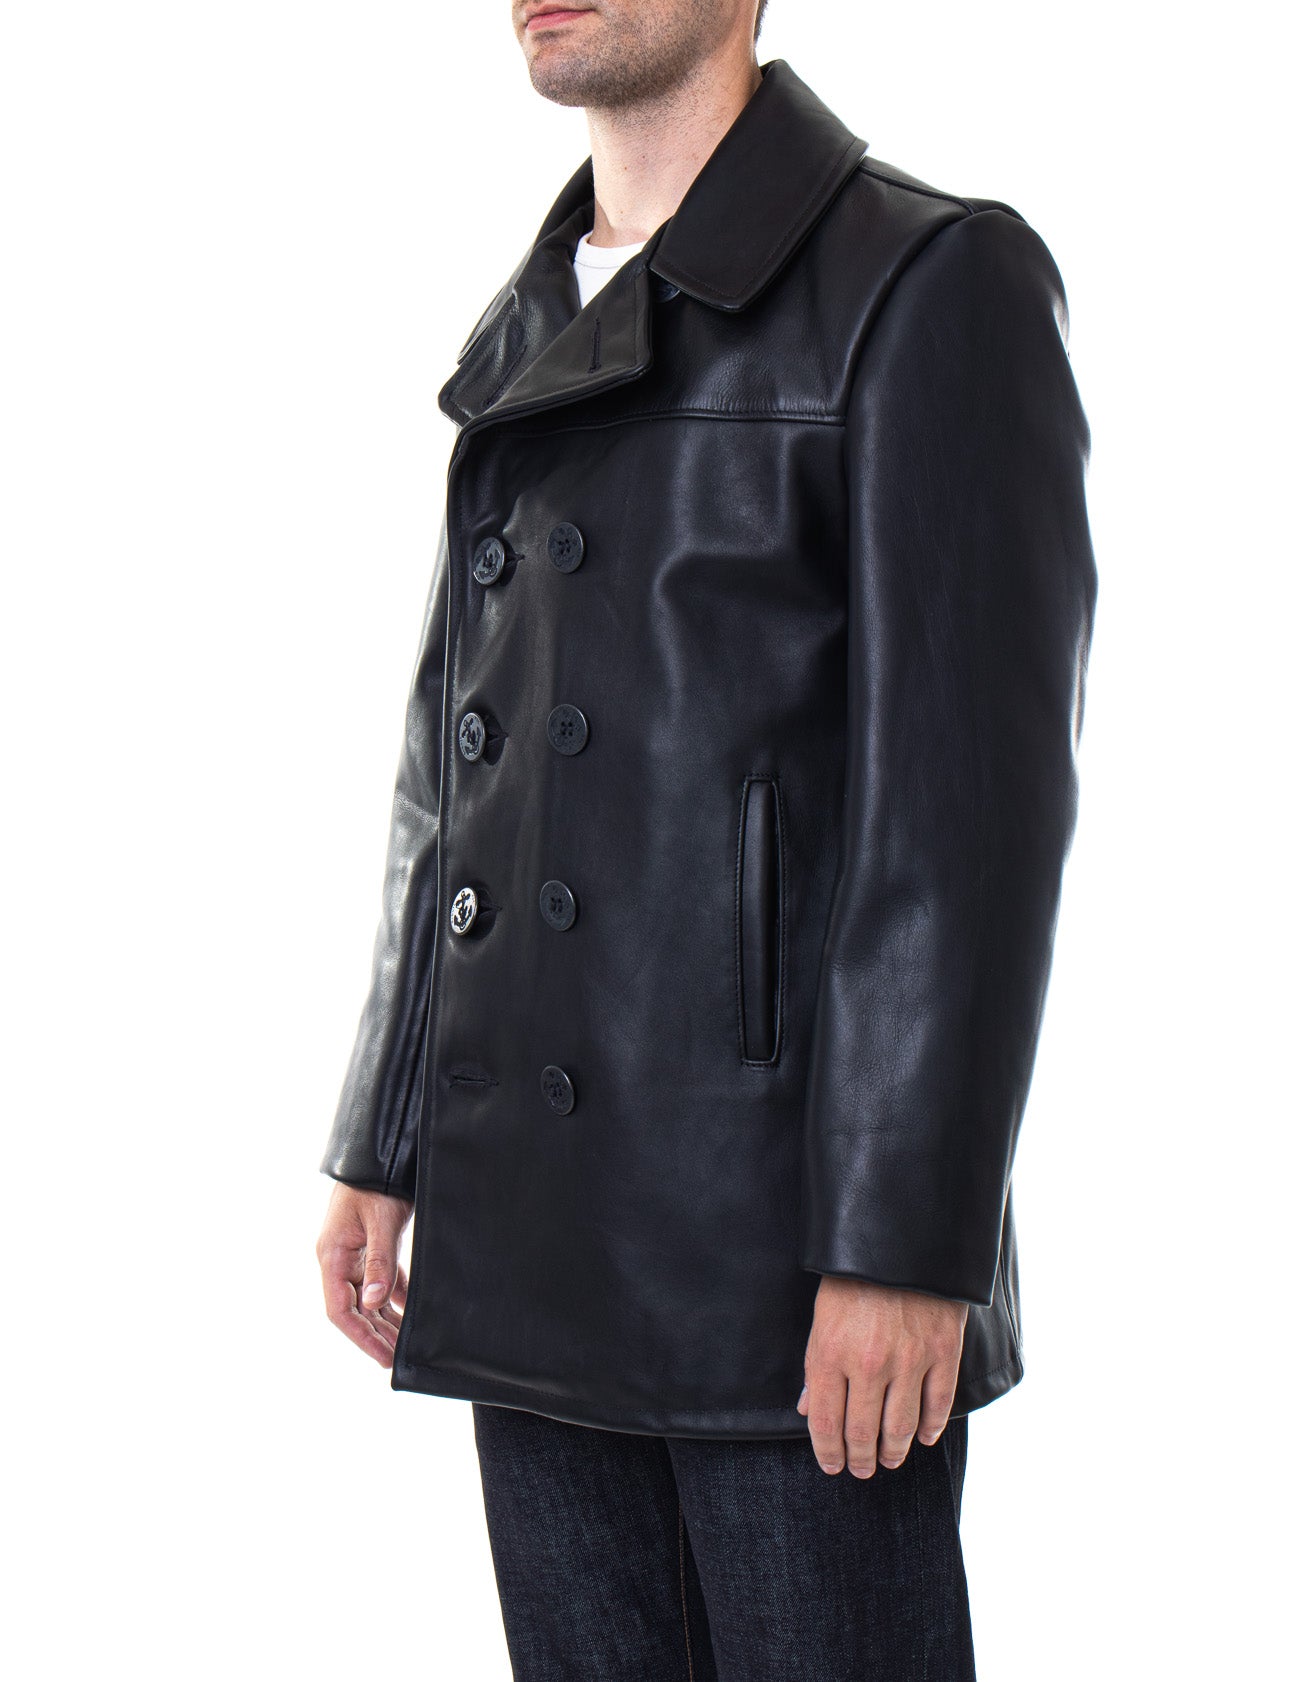 Leather Naval Pea Coat